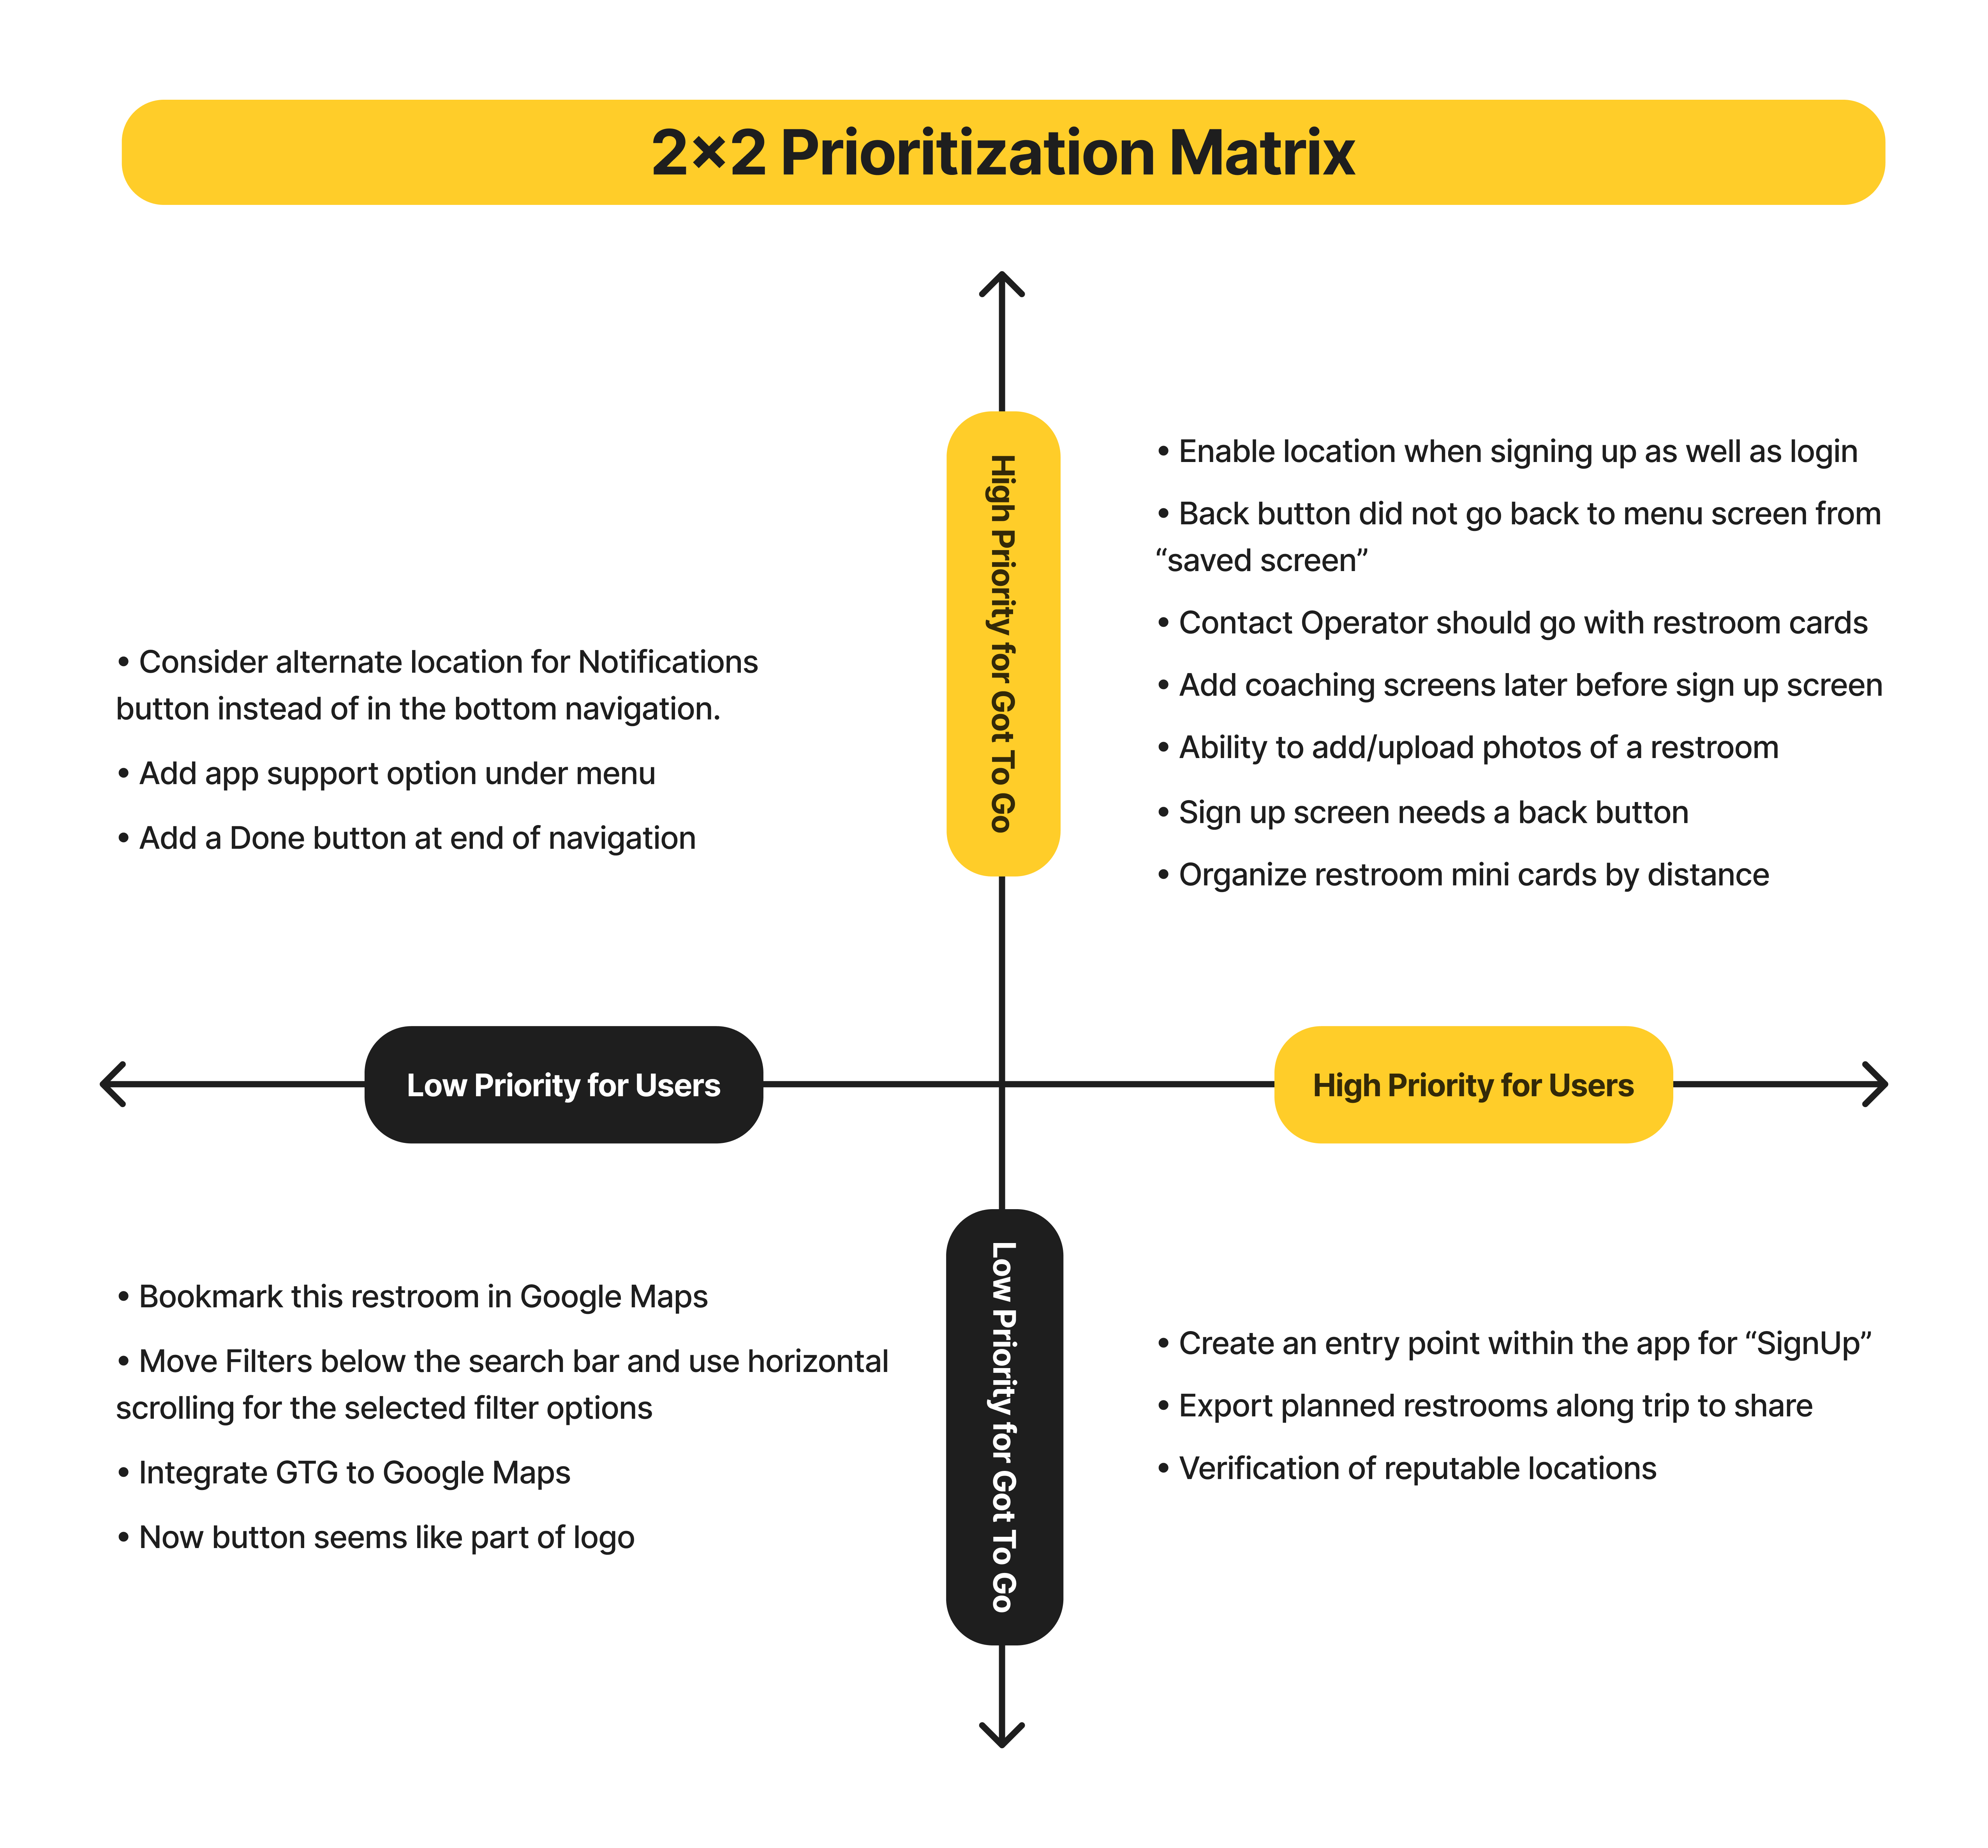 2x2 Prioritization Matrix